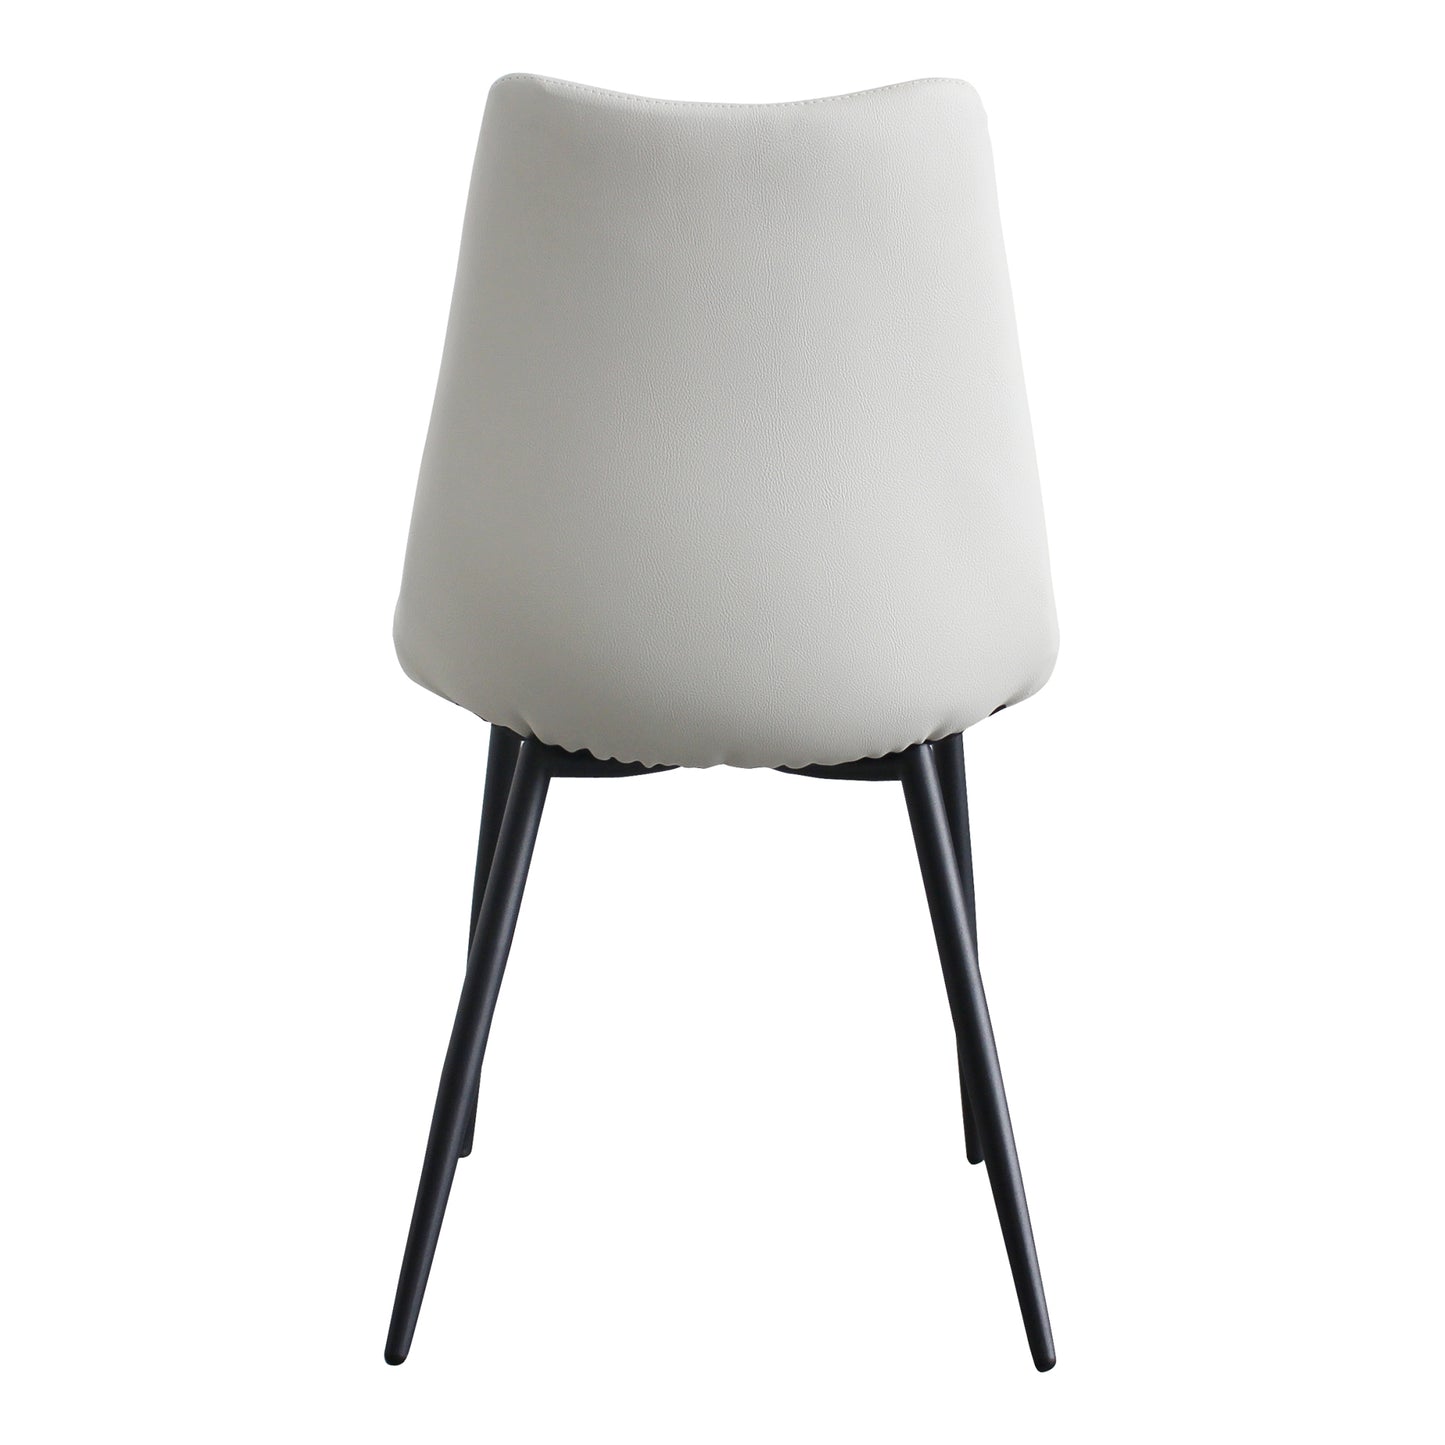 Alibi Dining Chair Ivory-M2